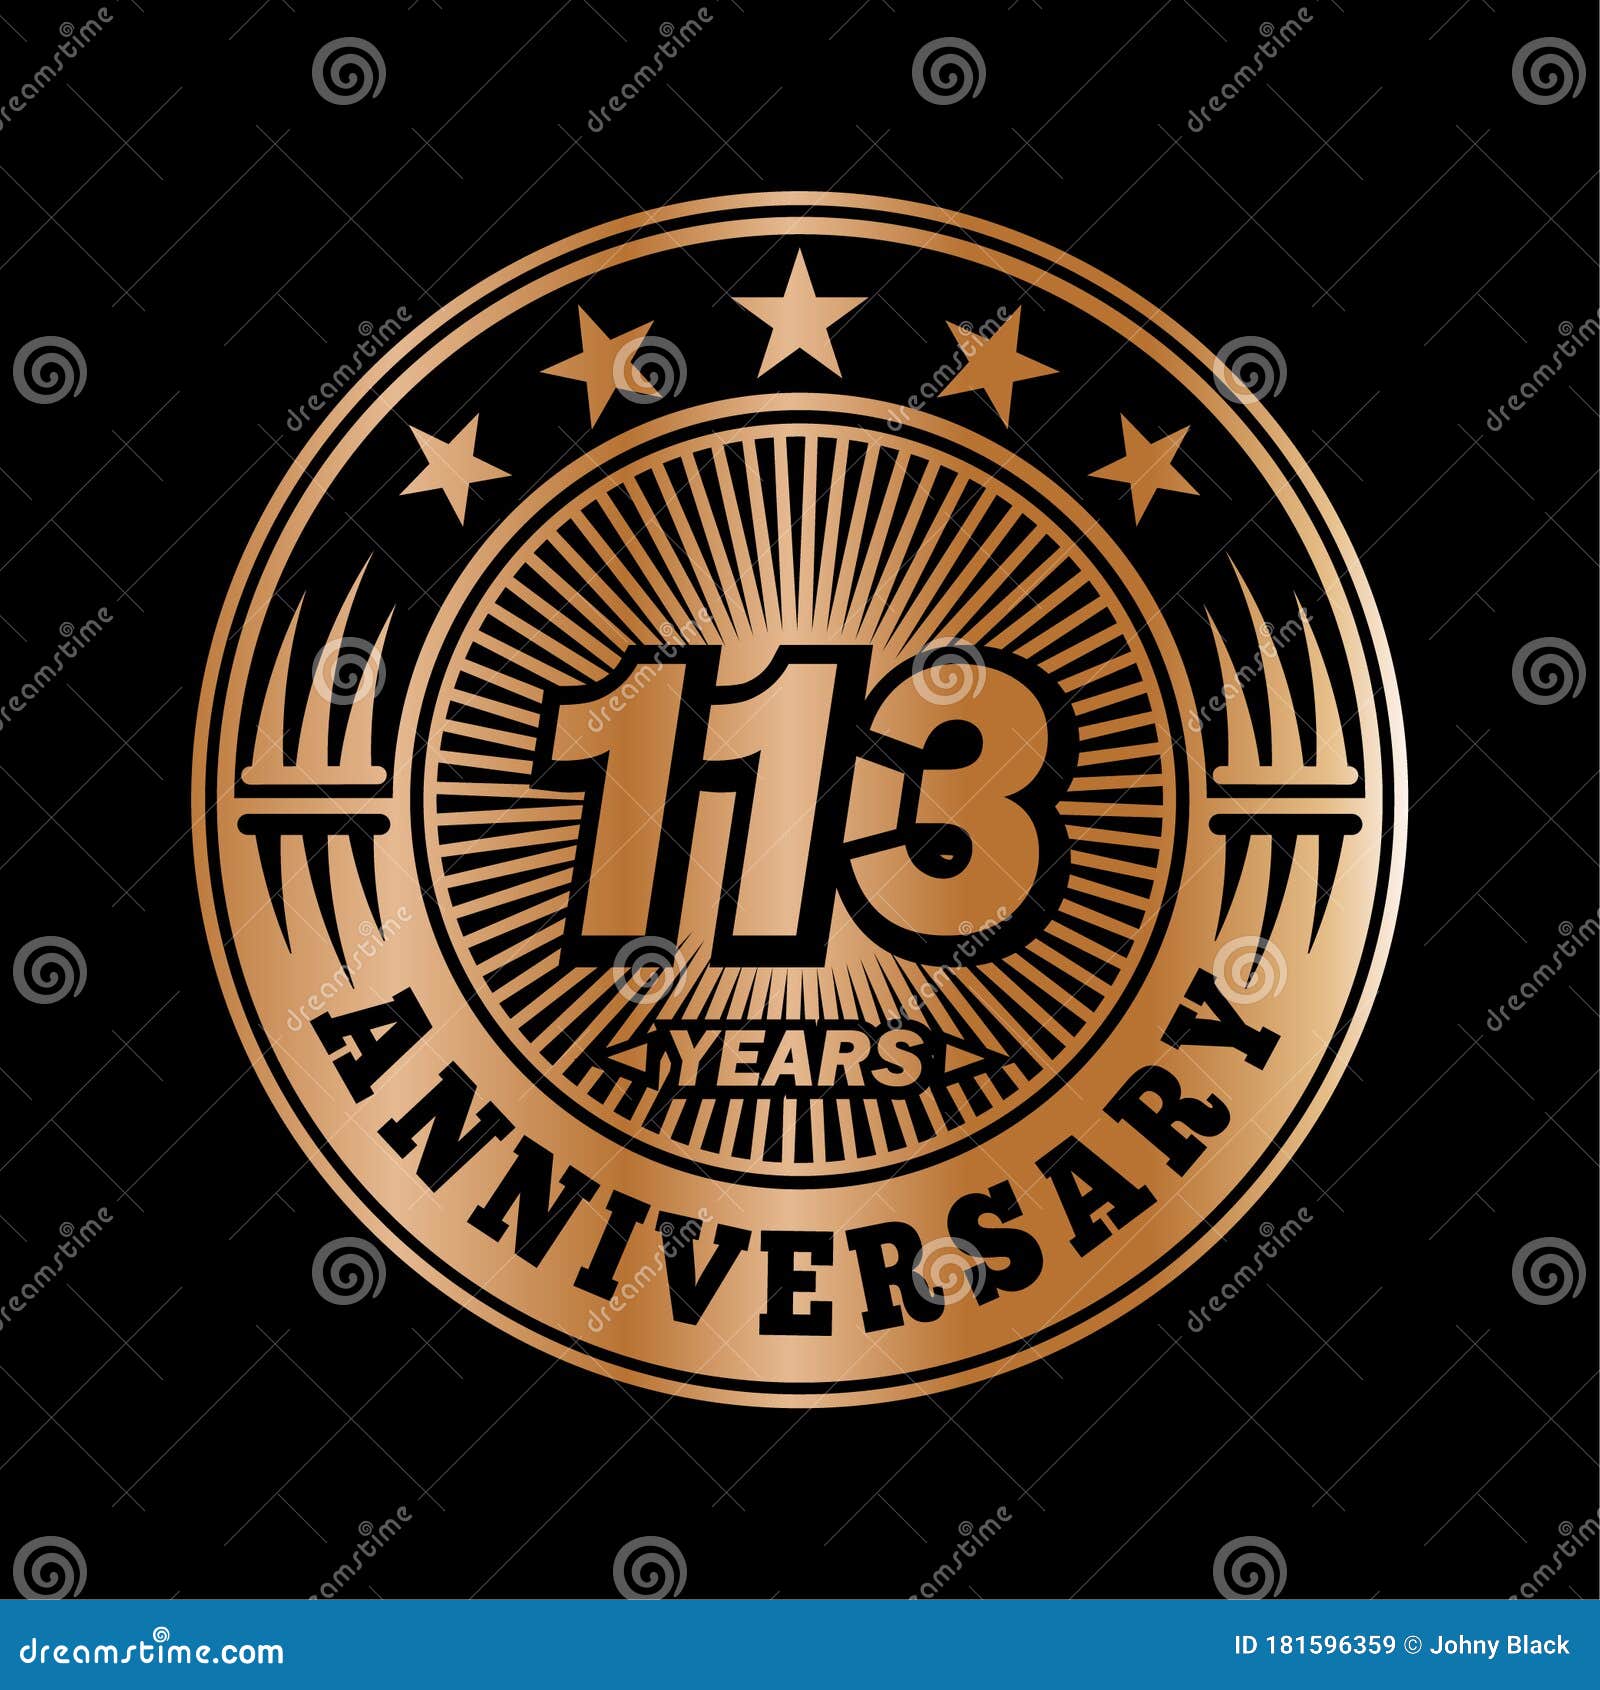 113 Years Anniversary Celebration 113th Anniversary Logo Design